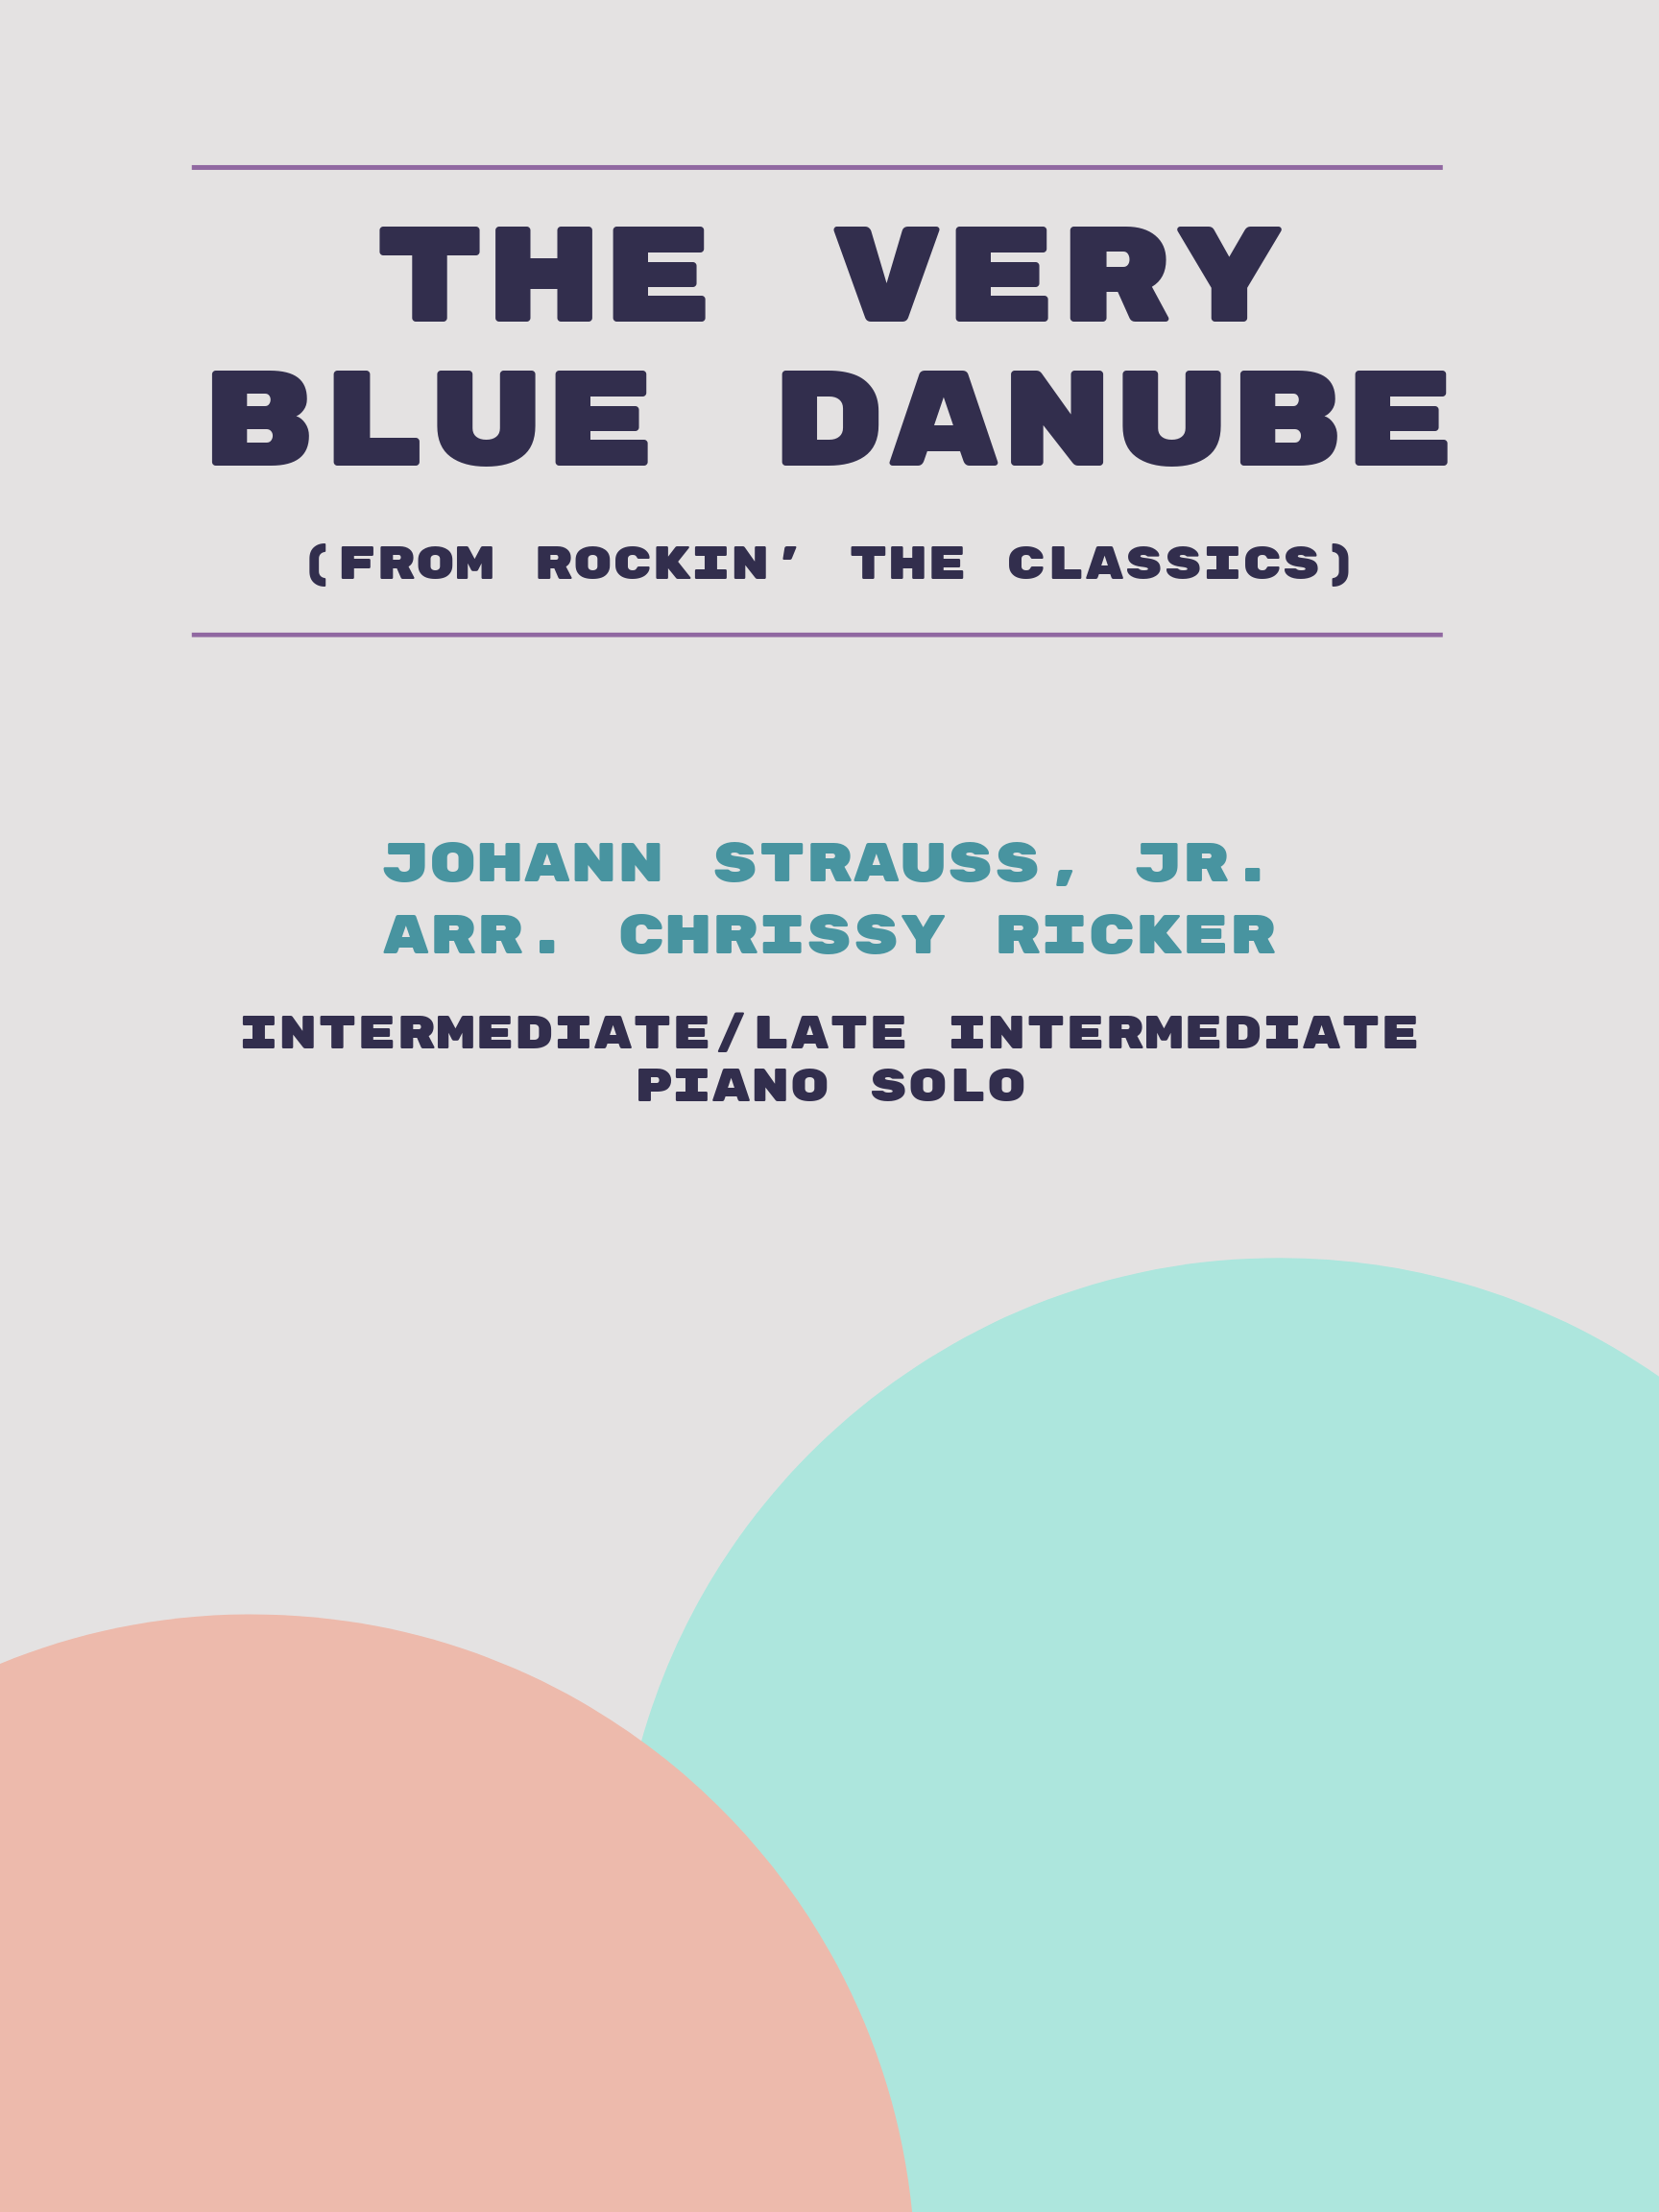 The Very Blue Danube by Johann Strauss, Jr.